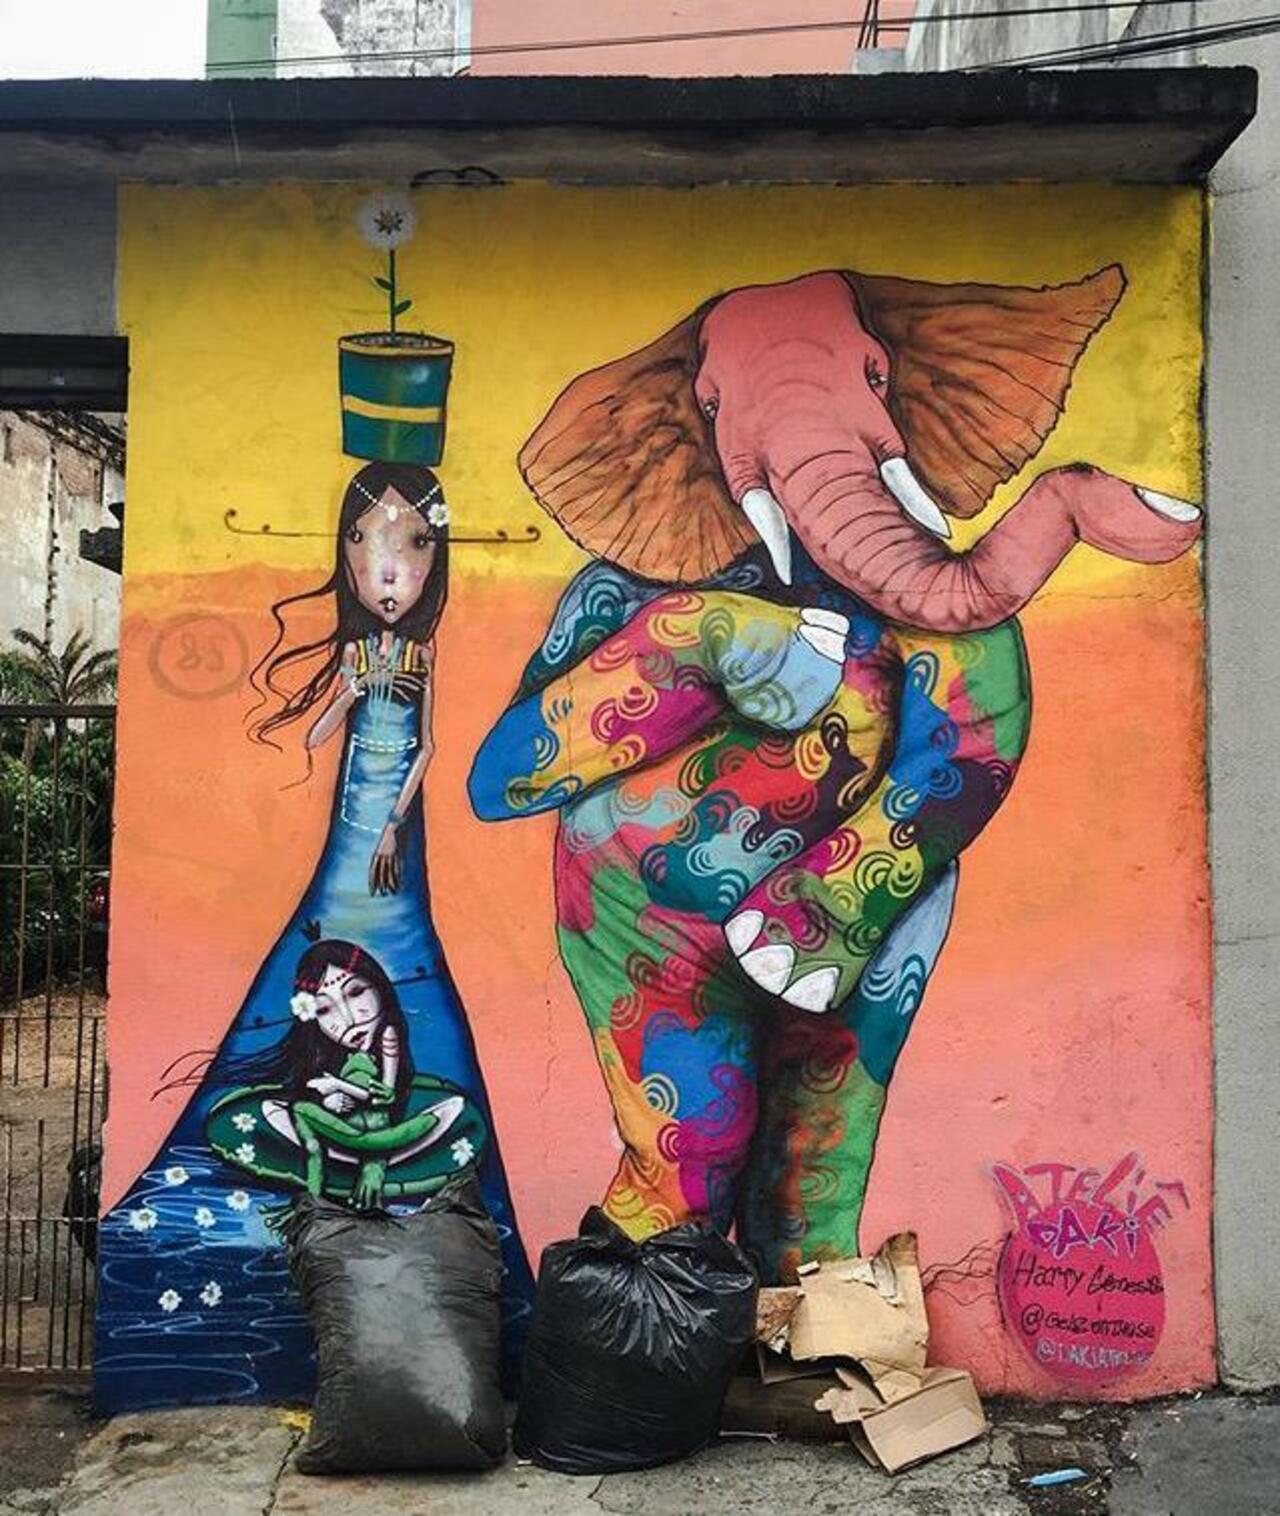 Street Art by Harry Geneis & Gelson in São Paulo 

#art #mural #graffiti #streetart http://t.co/SlLbhuMZfD … … …… http://twitter.com/GoogleStreetArt/status/648016473831645184/photo/1/large?utm_source=fb&utm_medium=fb&utm_campaign=charlesjackso14&utm_content=648018008938541056